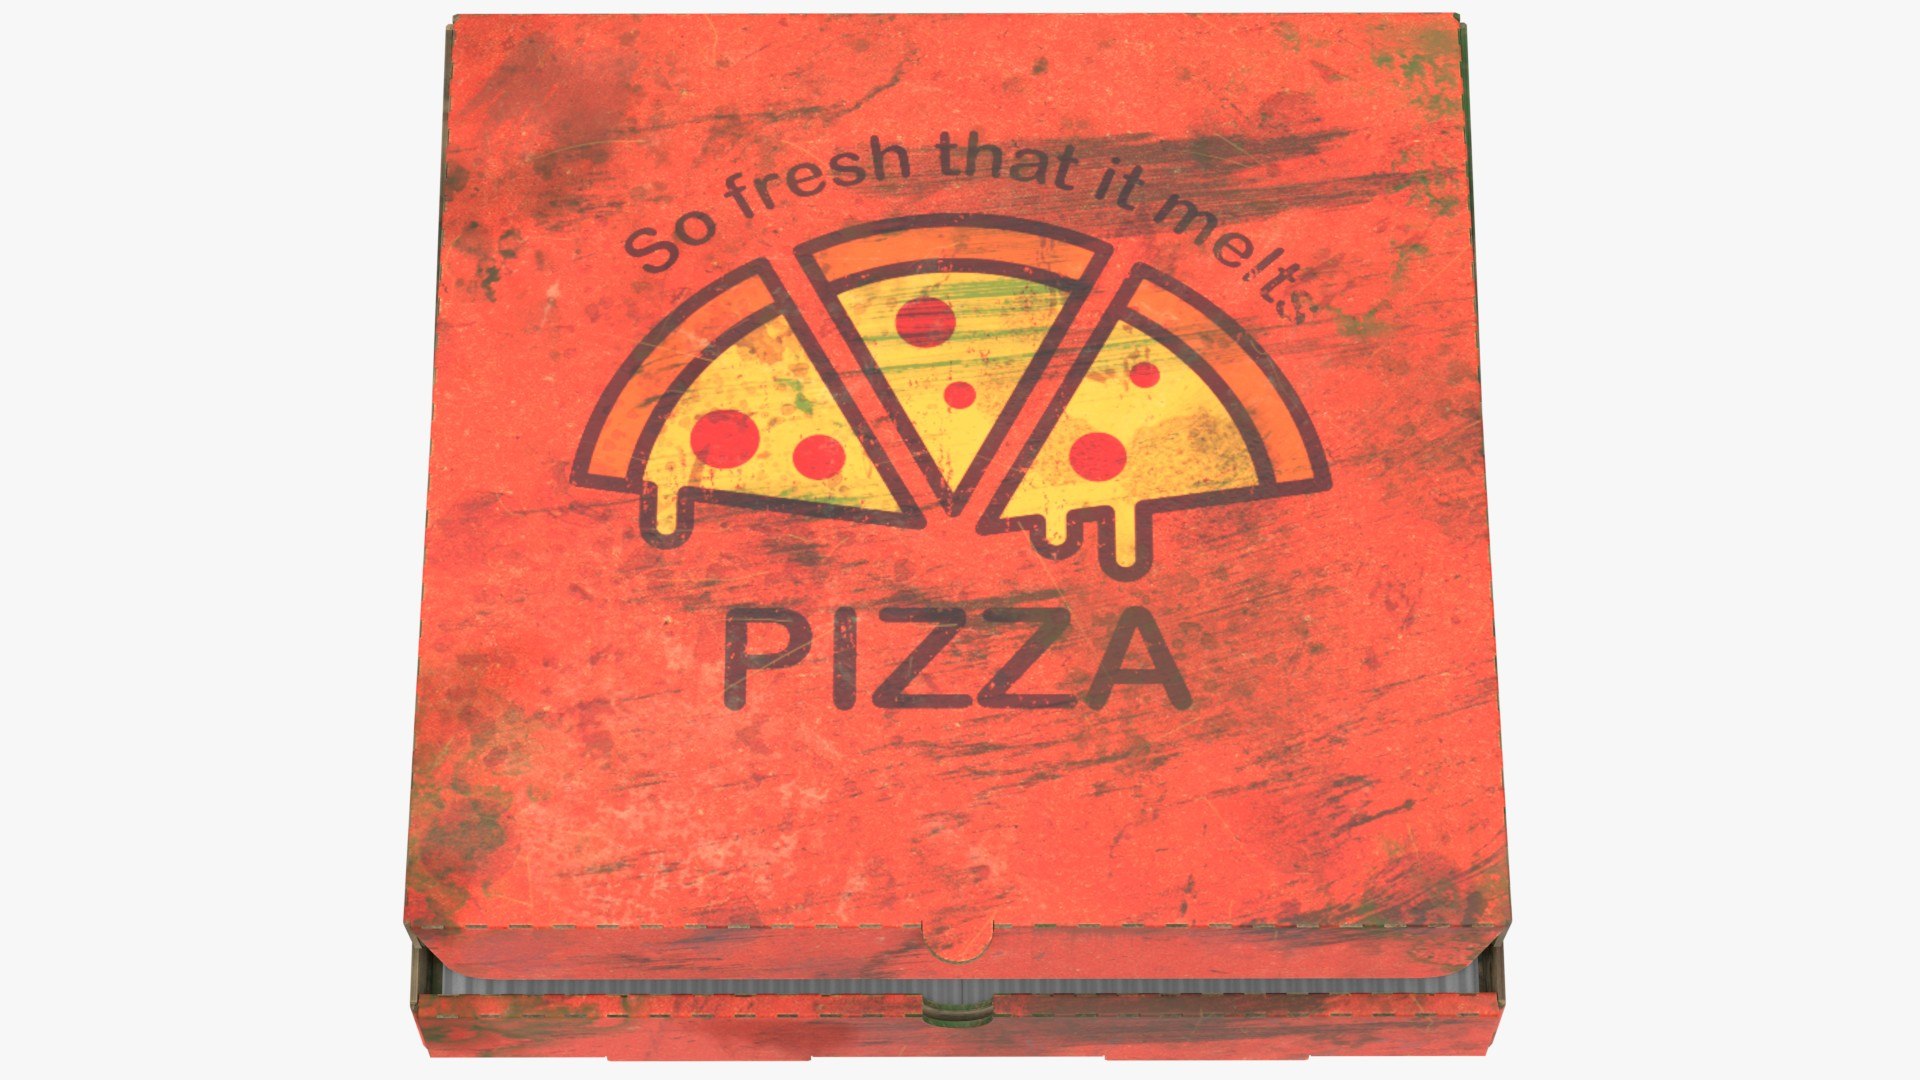 pizza box top